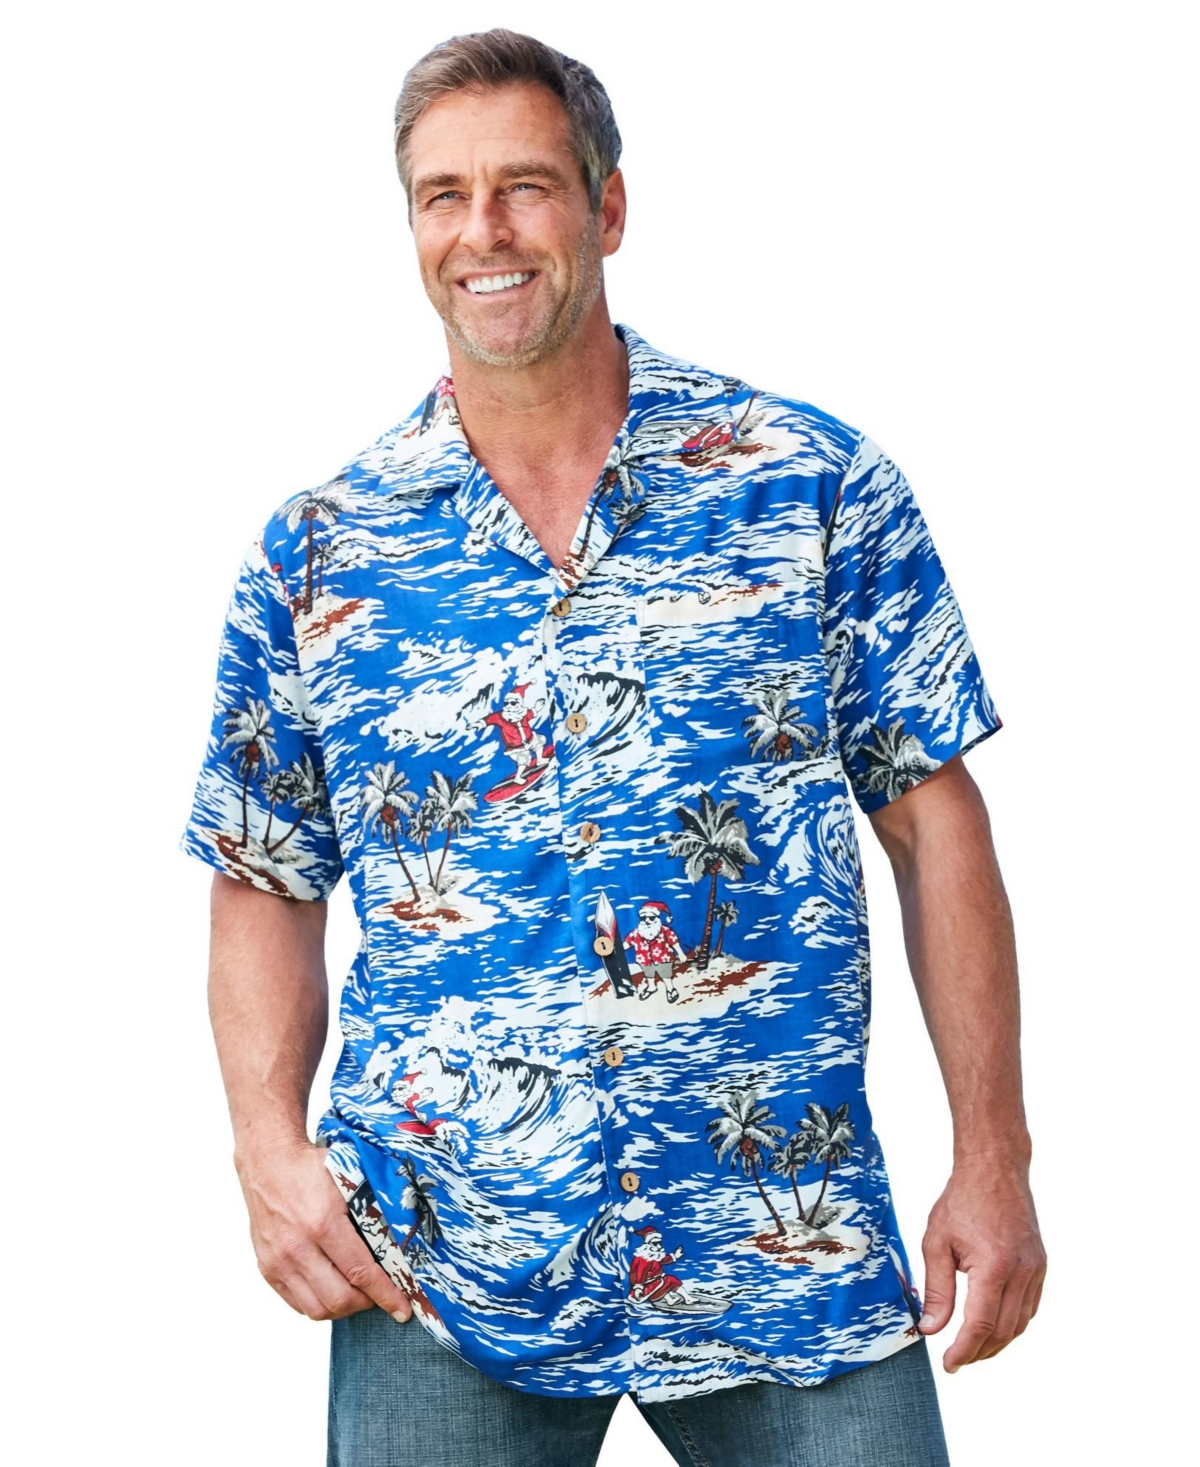 Big & Tall Ks Island Printed Rayon Short-Sleeve Shirt - Surfing pineapple